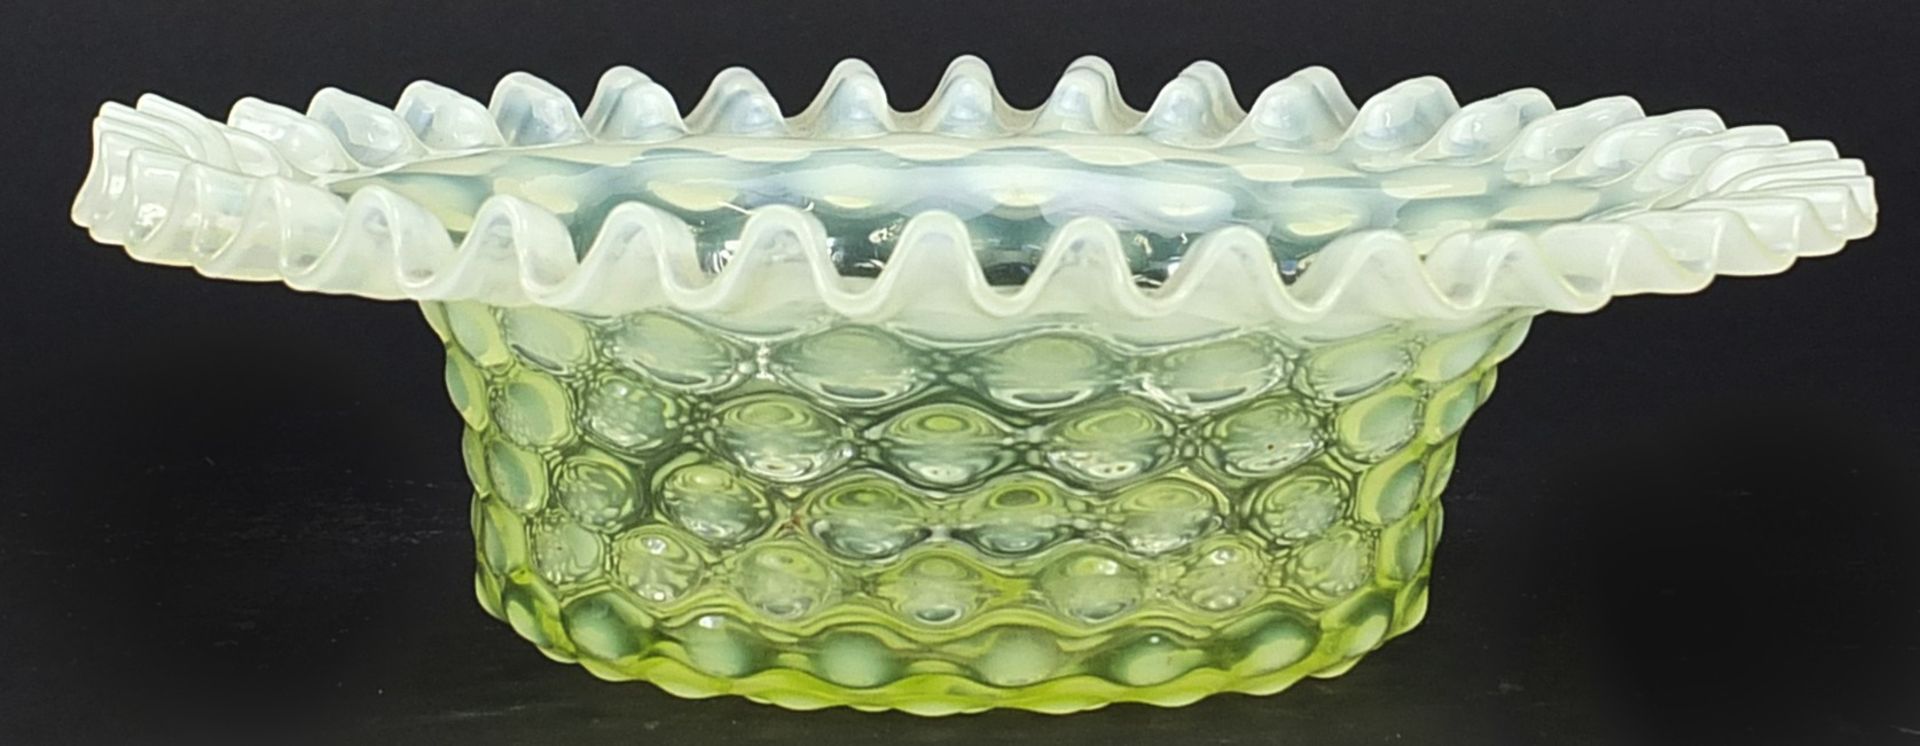 Art Nouveau Vaseline glass bowl with frilled rim, 22cm in diameter - Image 2 of 3